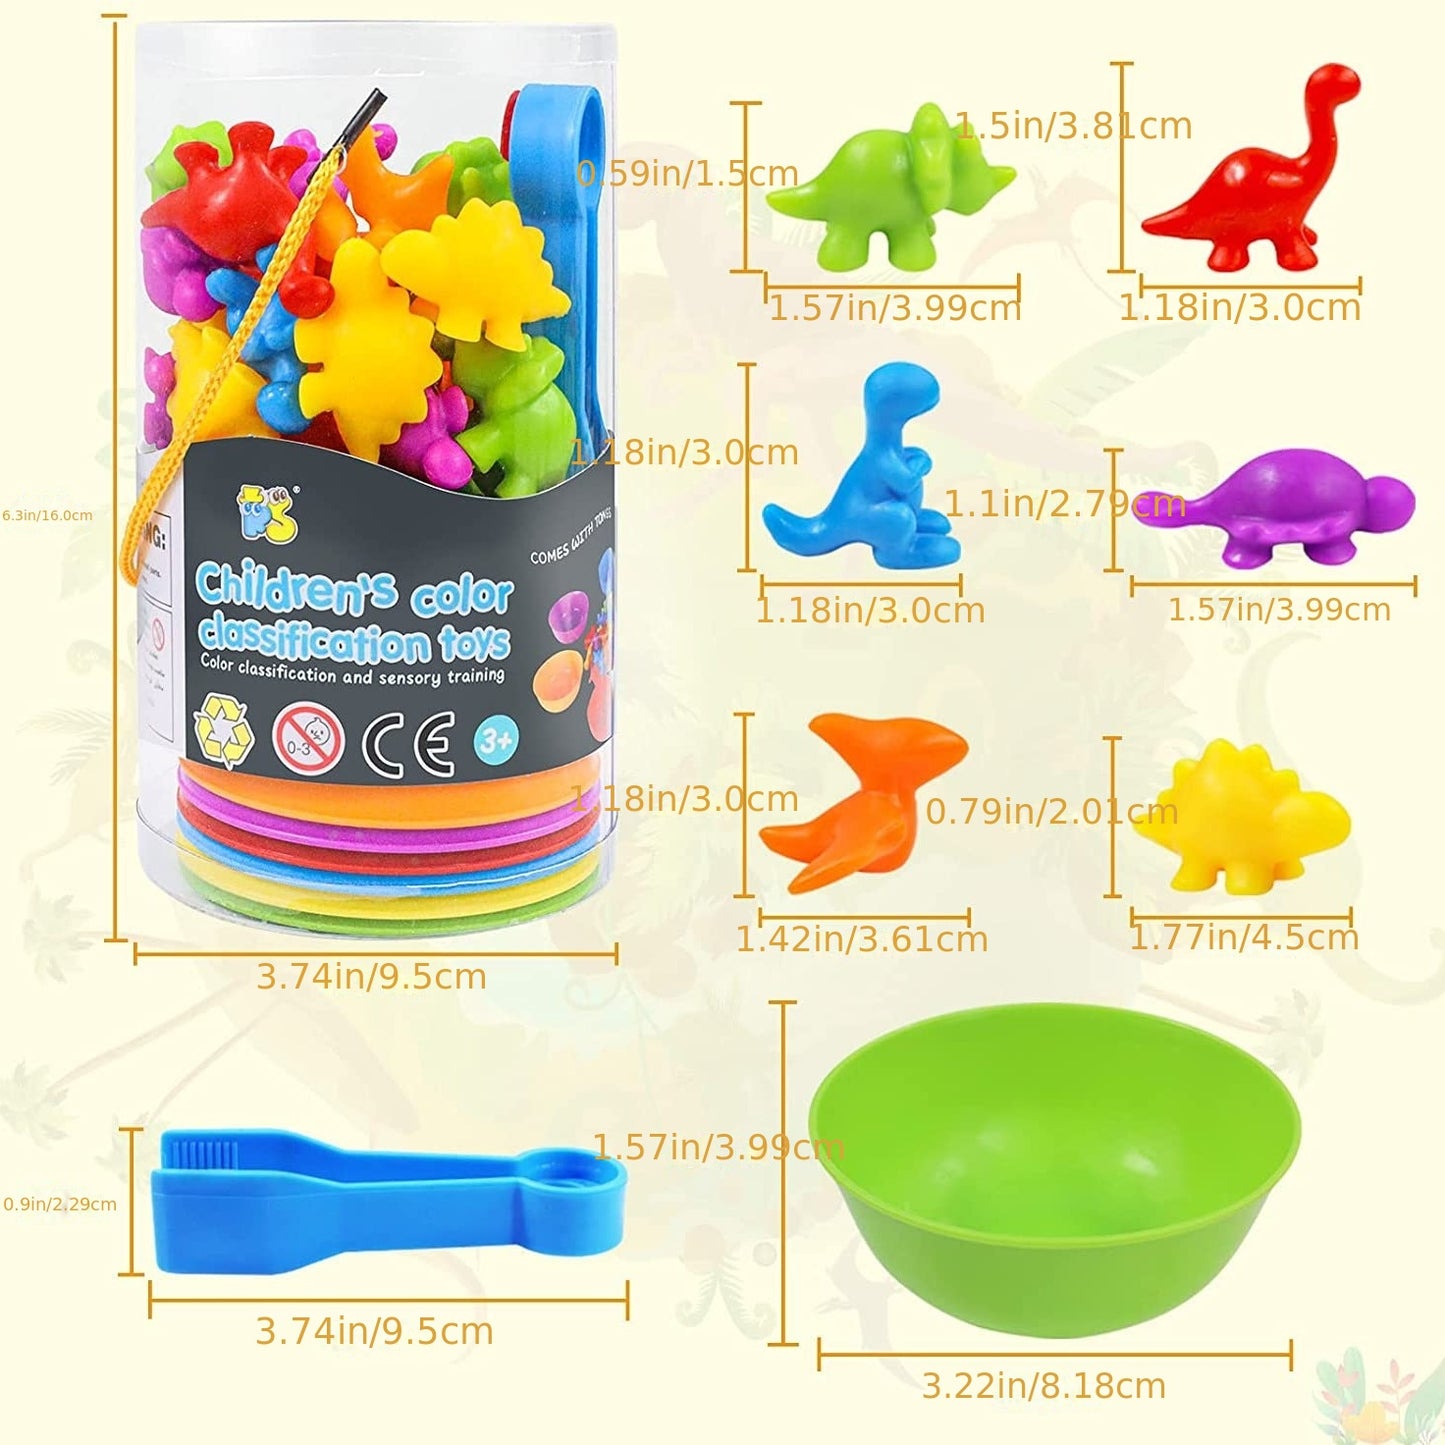 Dinosaur Matching Games & Sorting Bowls - STEM Toy Sets